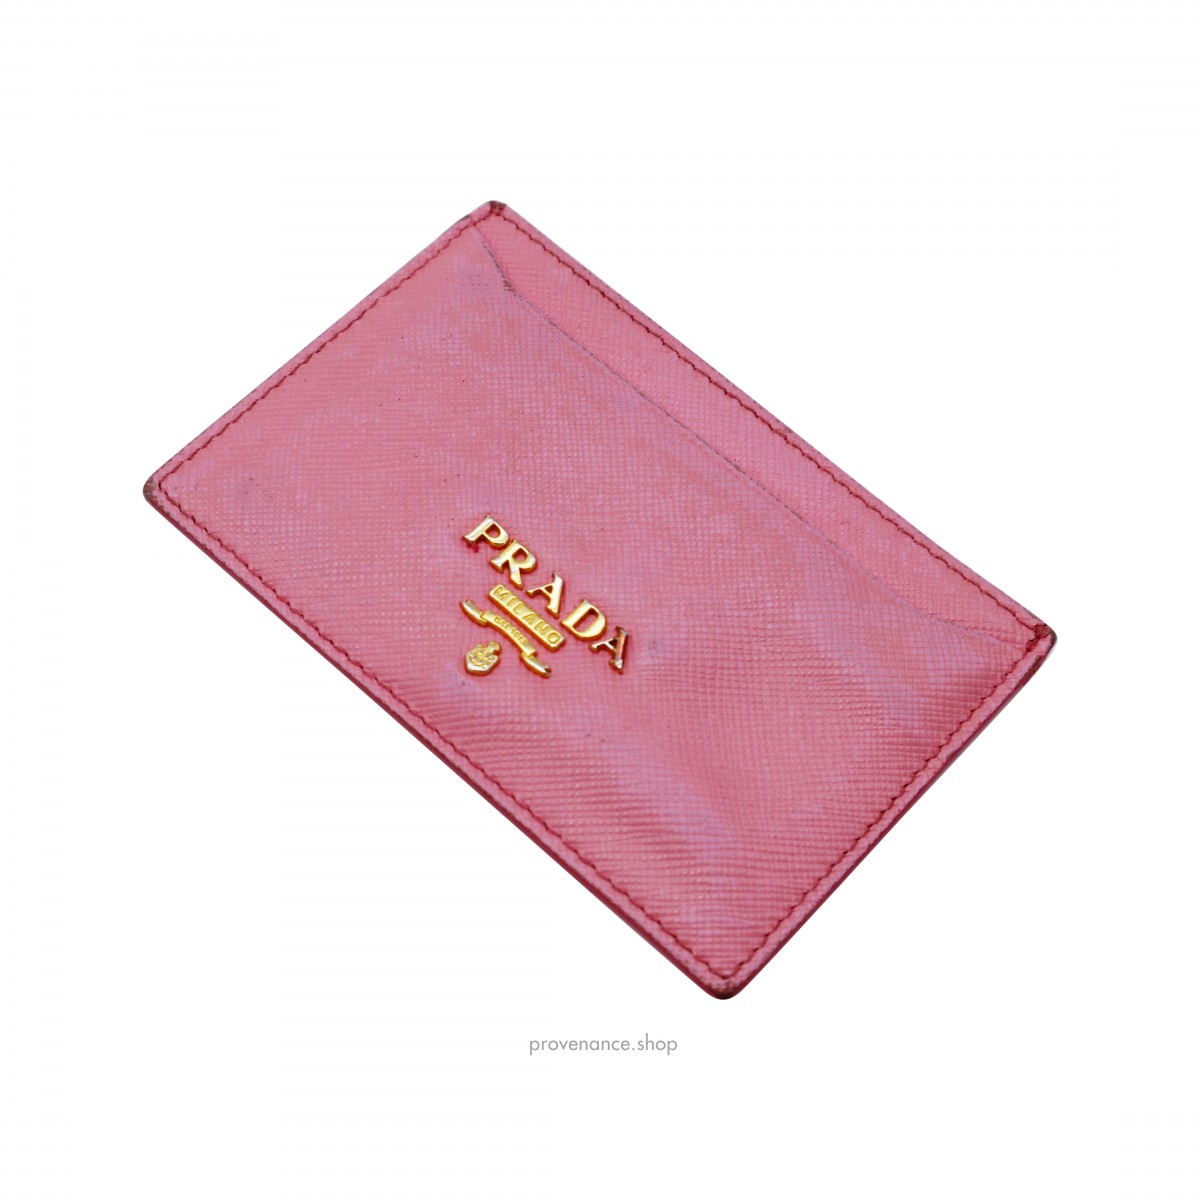 Prada Cardholder Wallet - Pink Saffiano Leather - 4